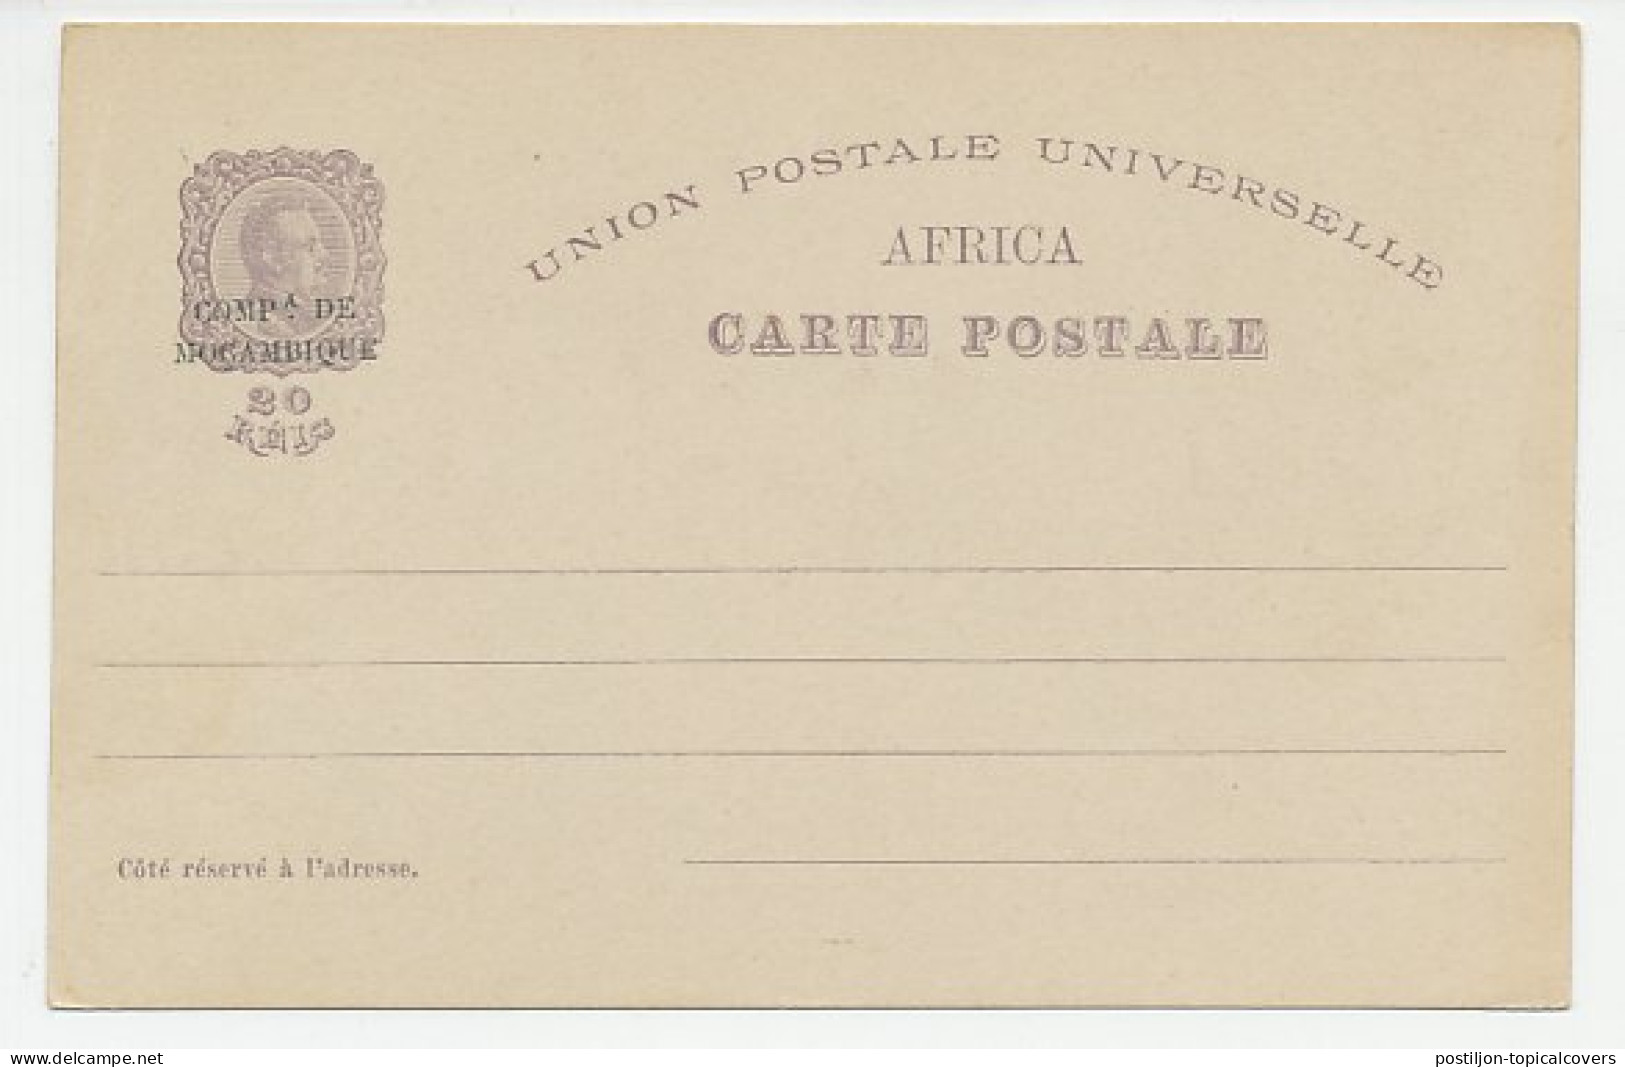 Postal Stationery Mozambique 1898 Centenary From India - Castello Da Pena - Castillos